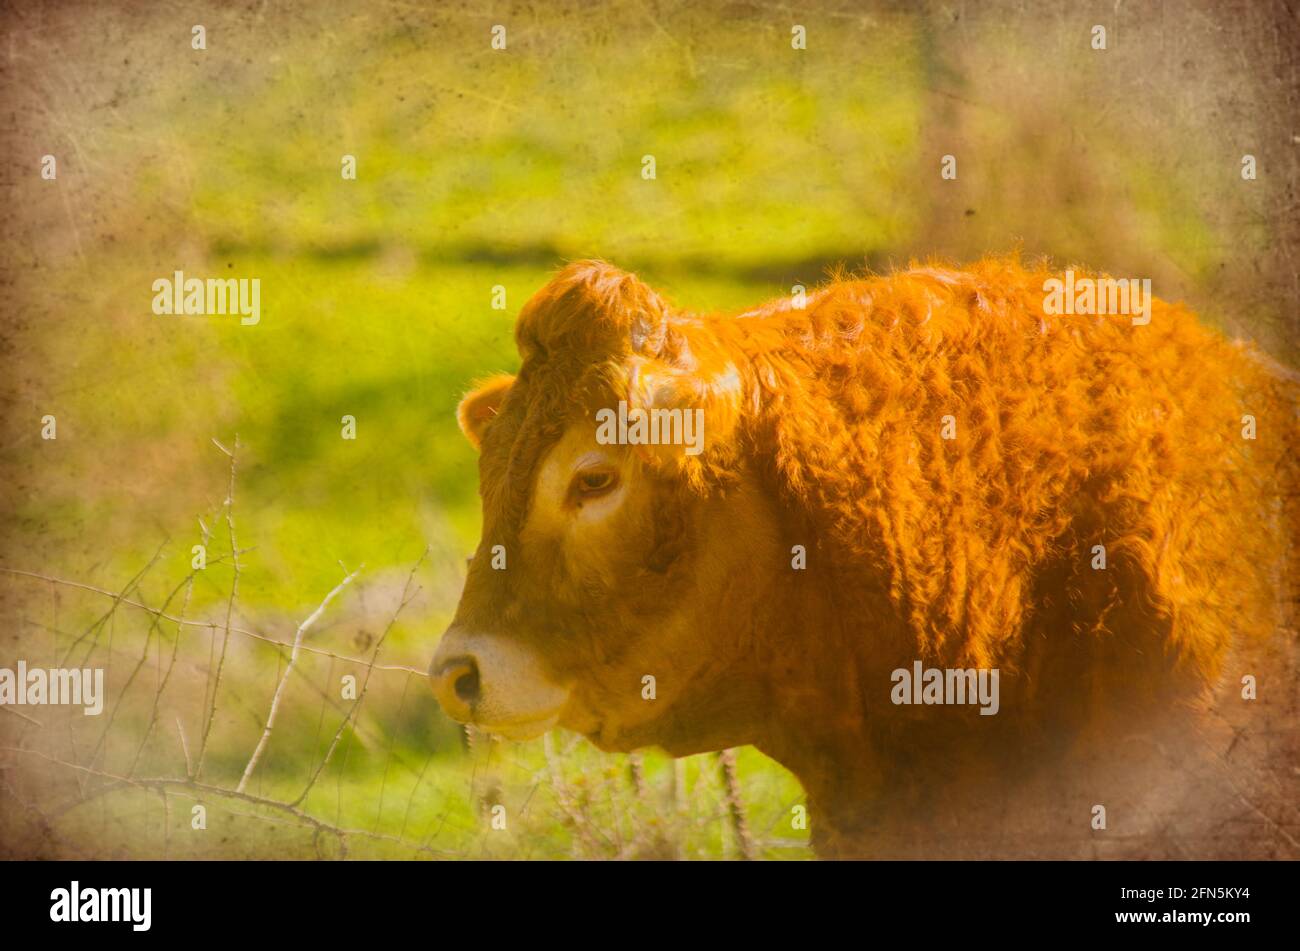 mucca di campagna : ganaderia de zona montañosa. Foto Stock